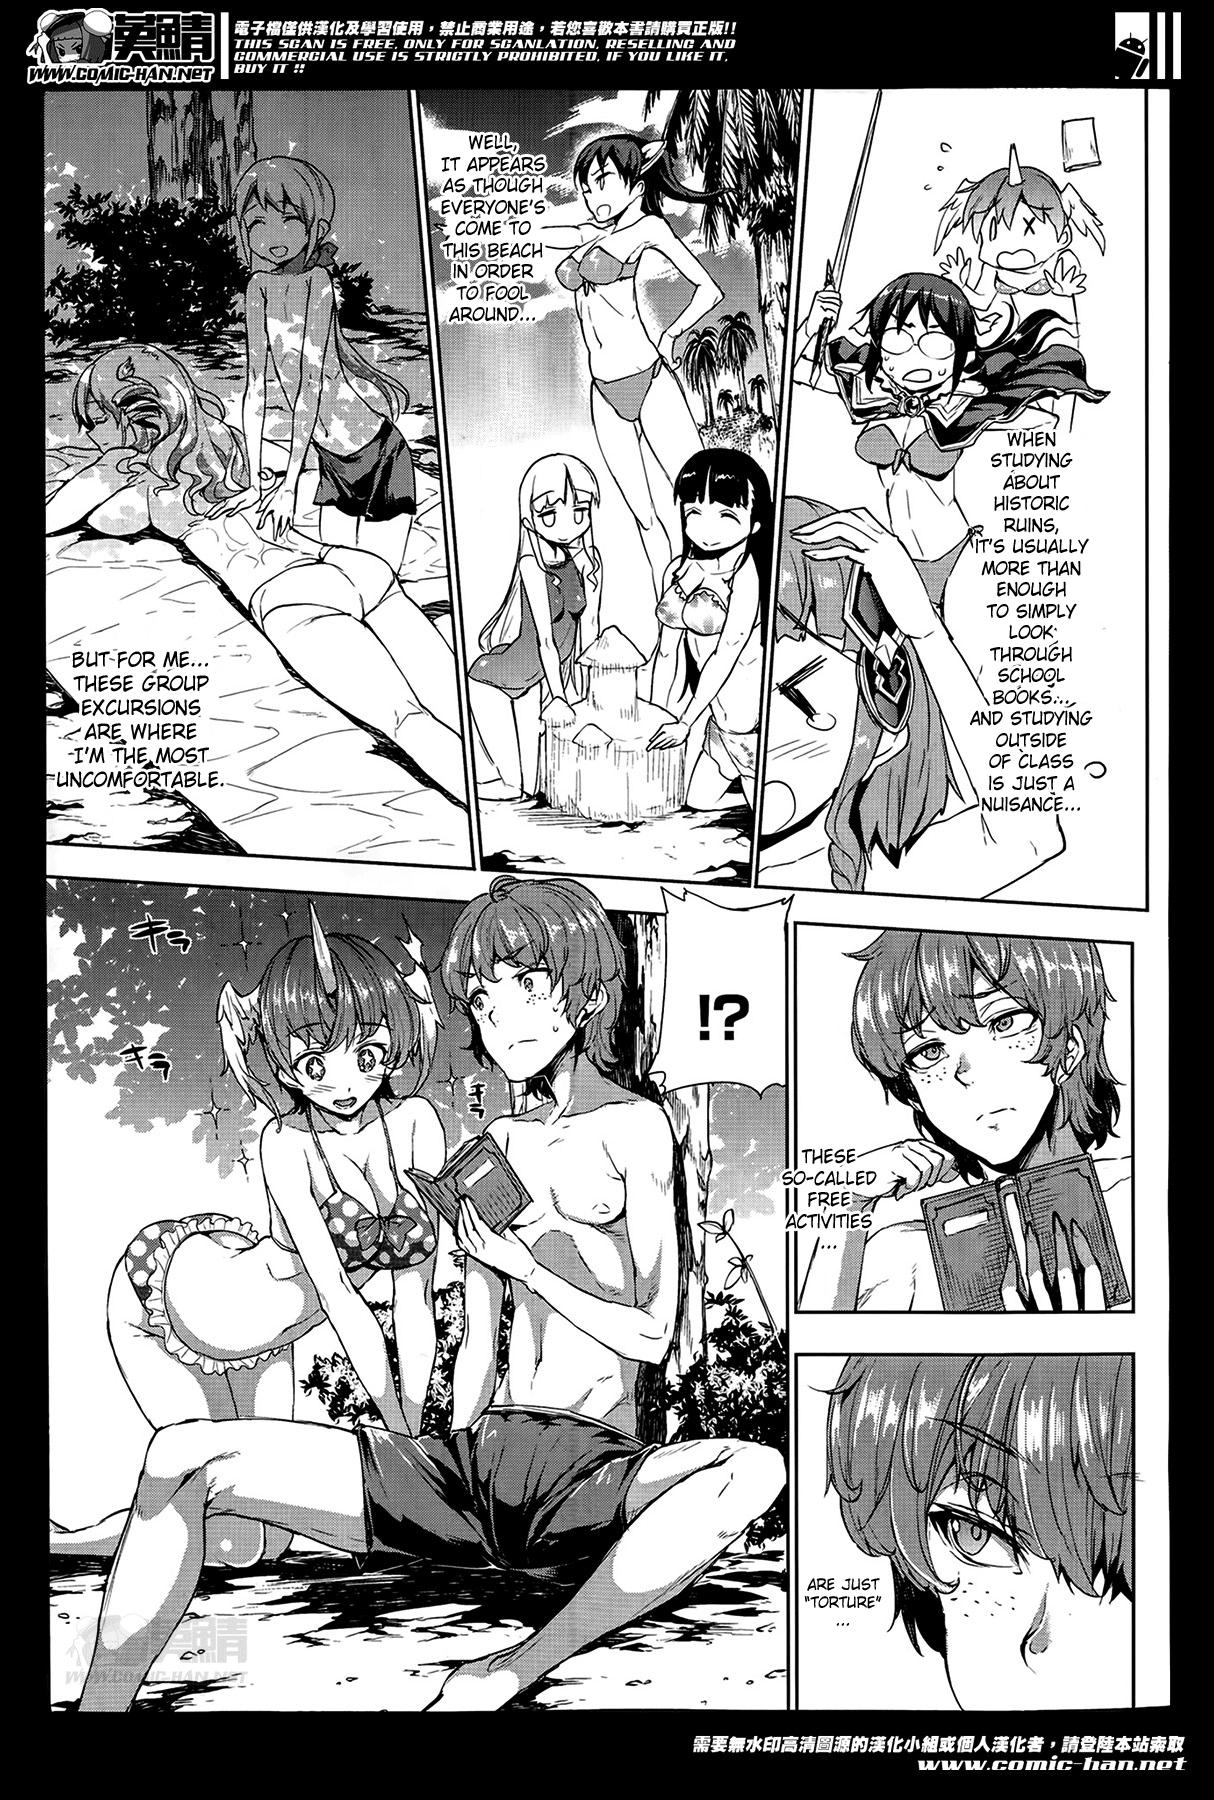 [Erect Sawaru] Shinkyoku no Grimoire -PANDRA saga 2nd story- Ch. 1-17 + Side Story x 3 [English] [SaHa] 304